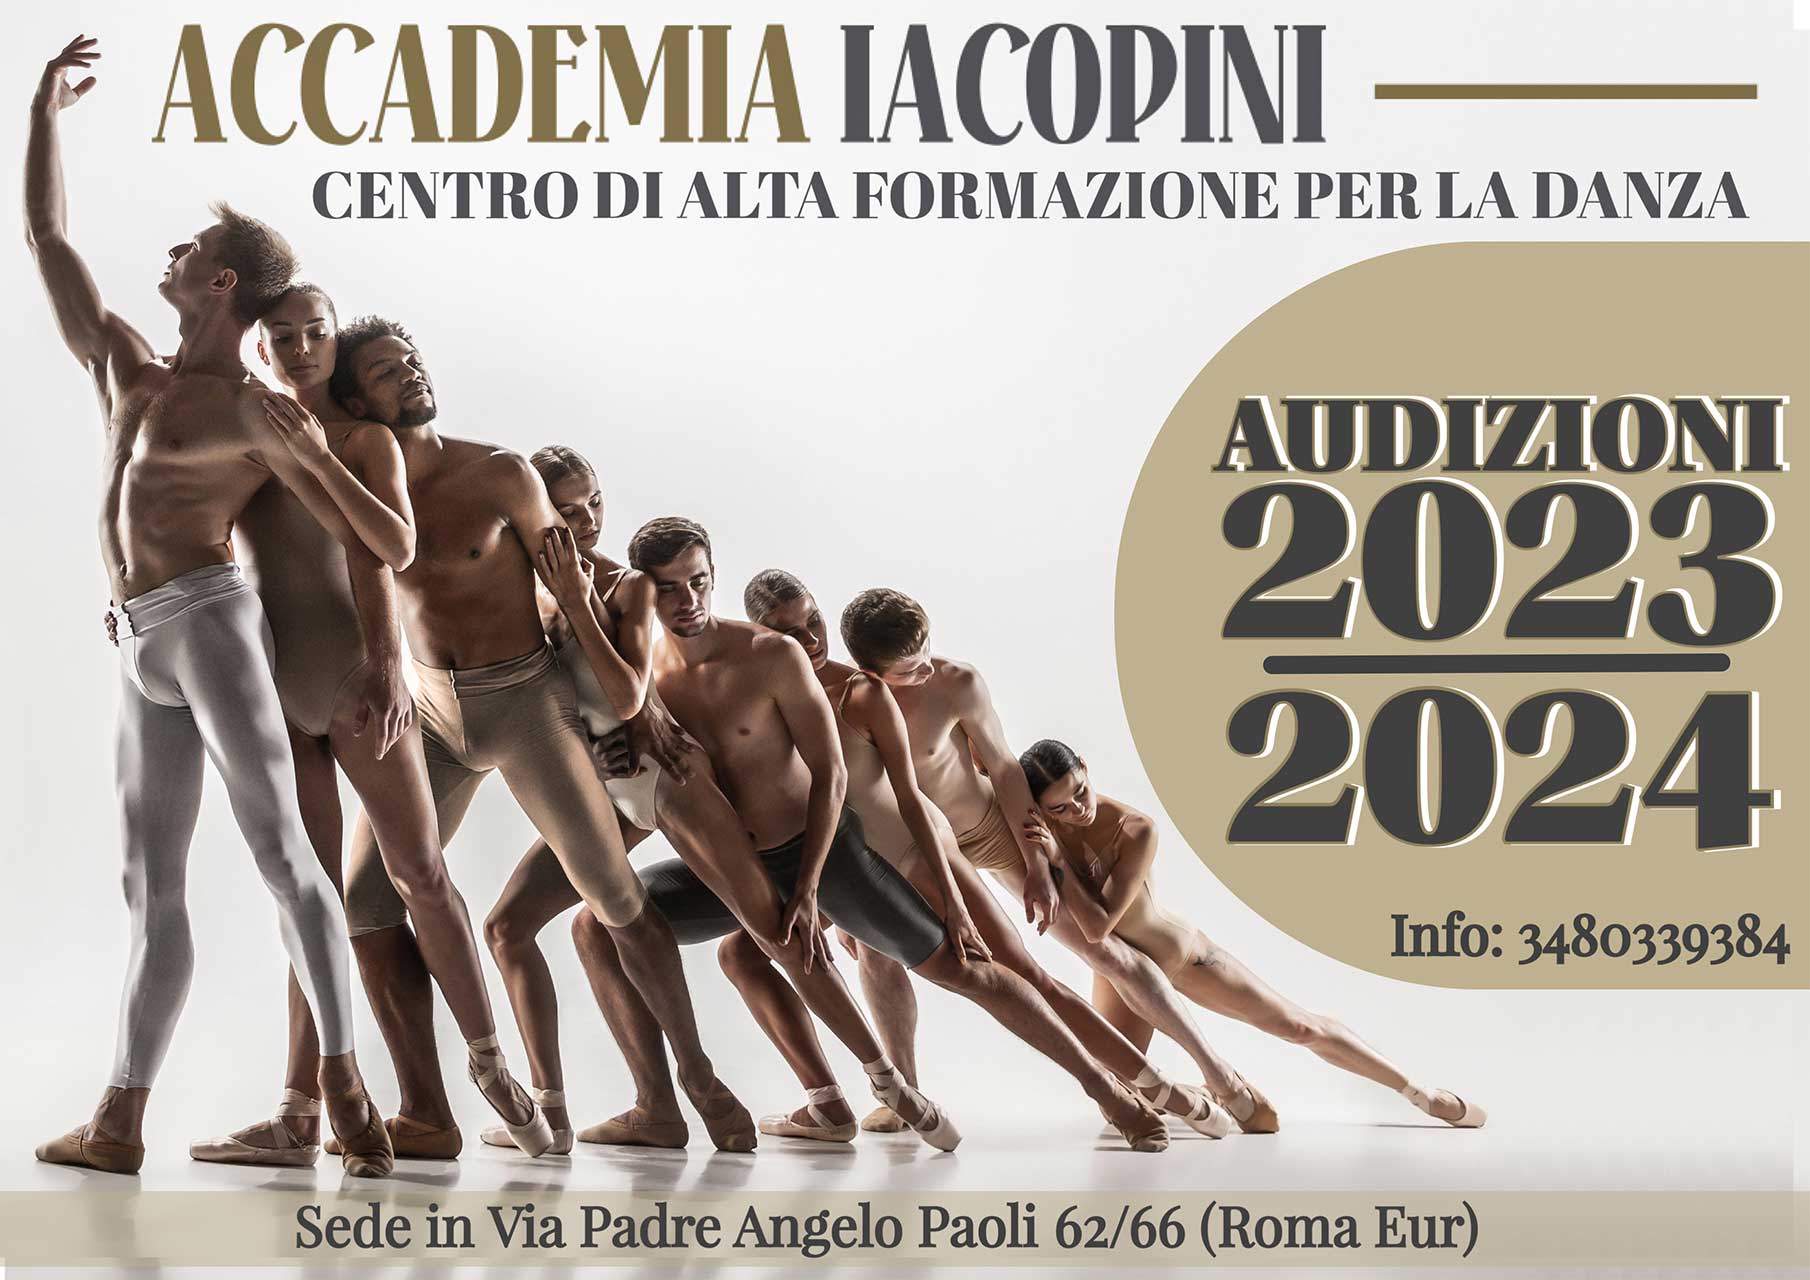 accademia_iacopini-audizioni_2023_2024